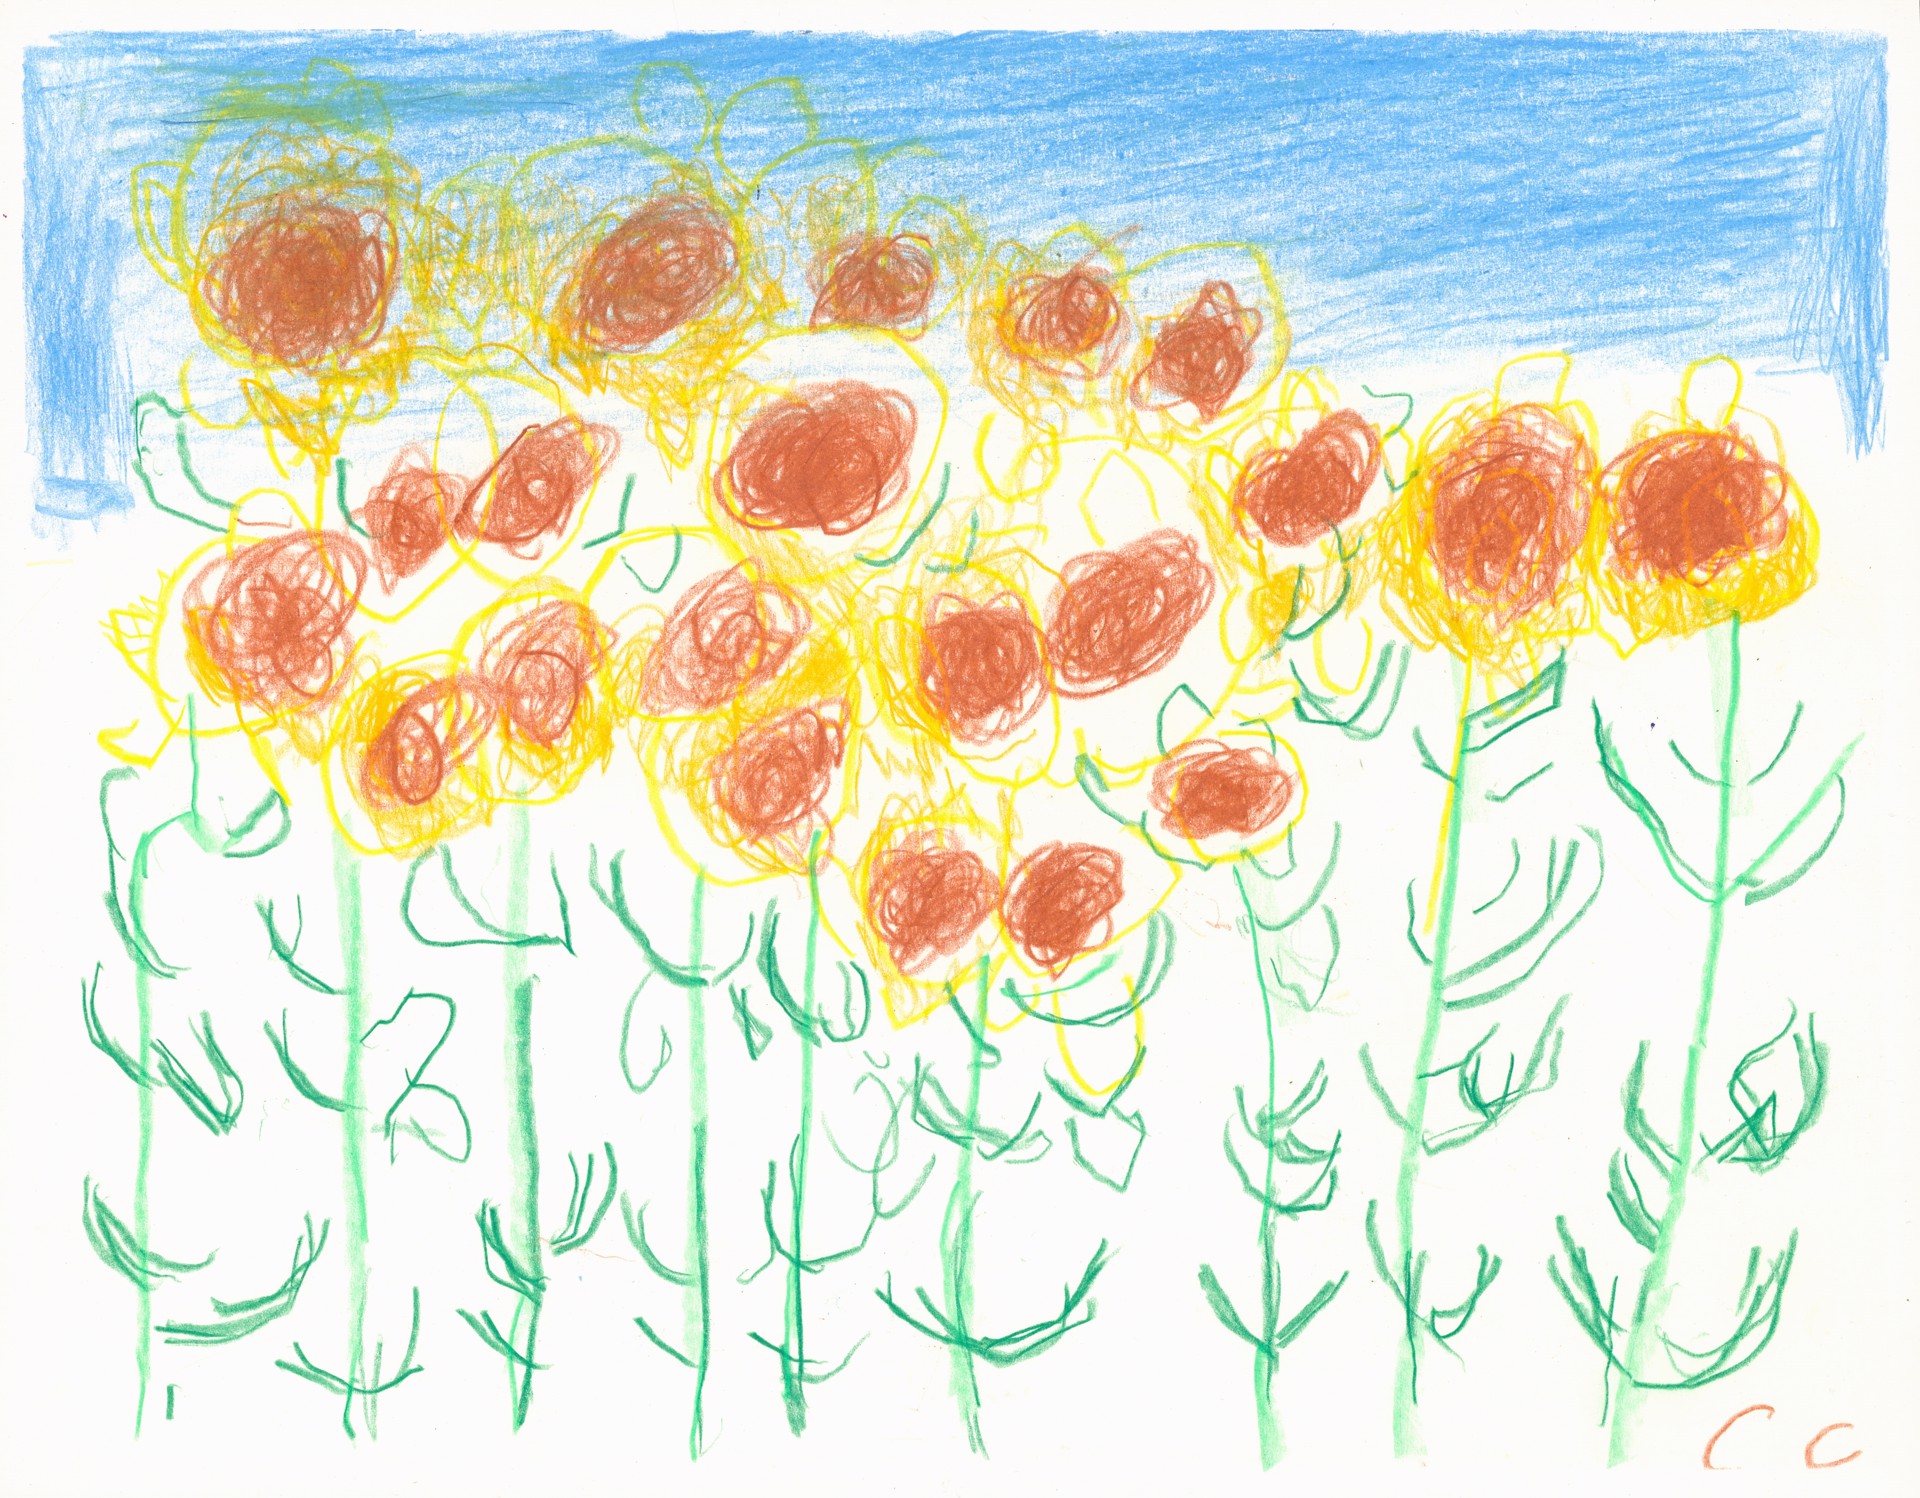 Sunflowers by Calvin "Sonny" Clarke